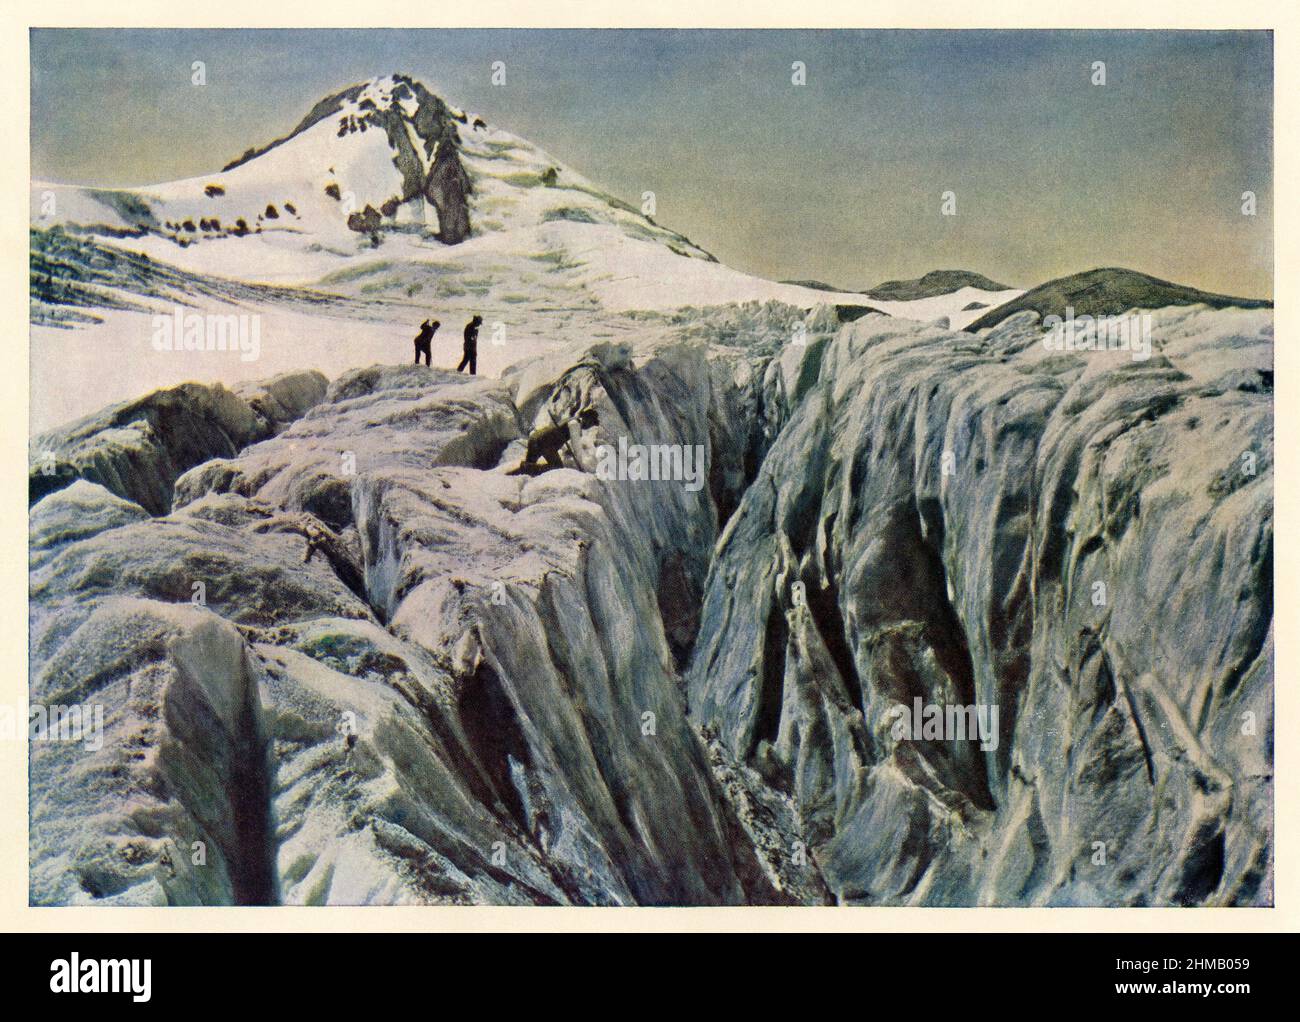 Kletterer auf dem Eliot Glacier, Mount Hood, Oregon, Anfang 1900s. Farbhalbton eines Fotos Stockfoto